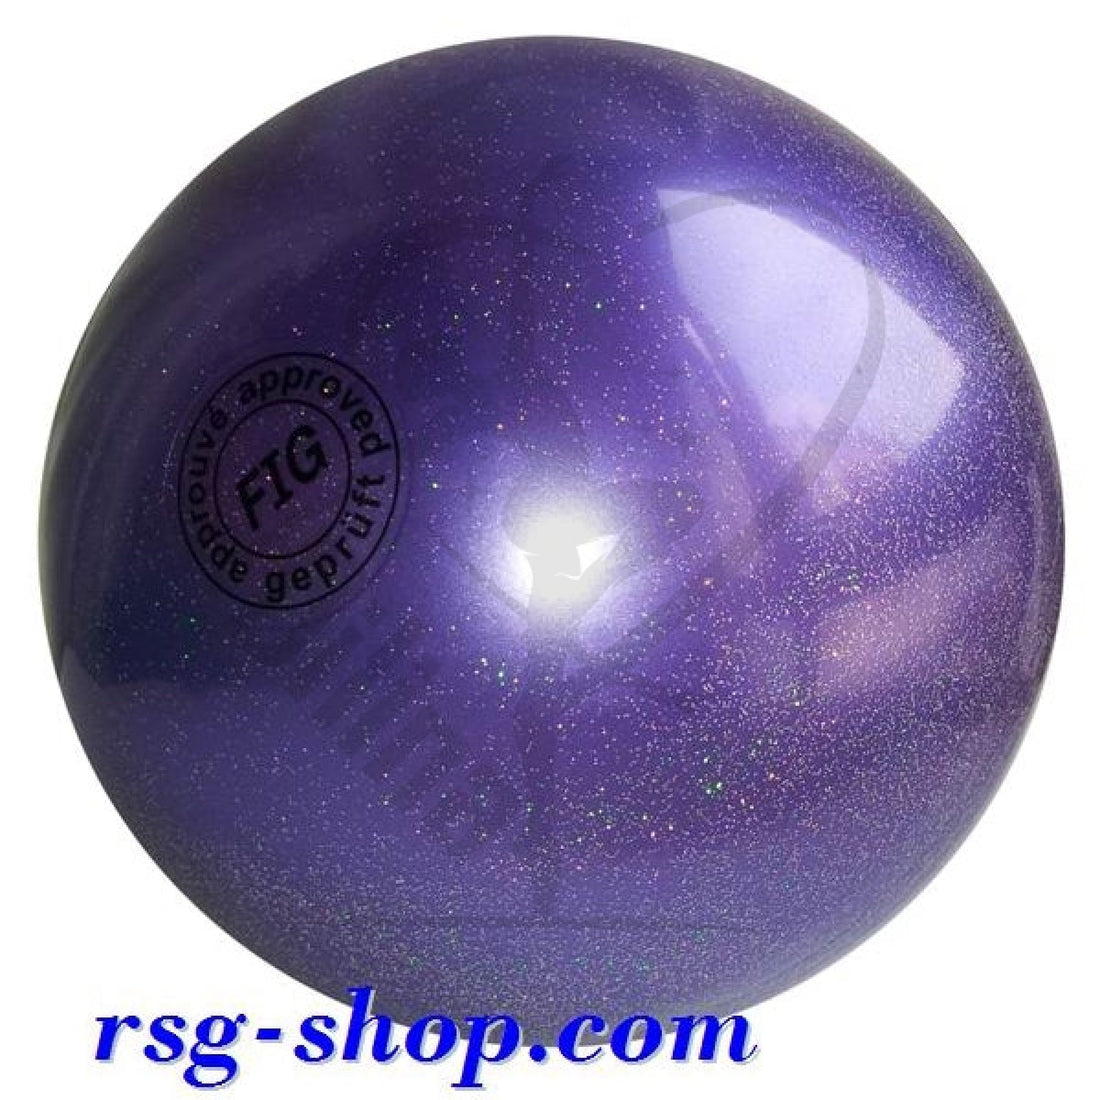 Tuloni Metallic Glitter Ball 16Cm Violet Balls